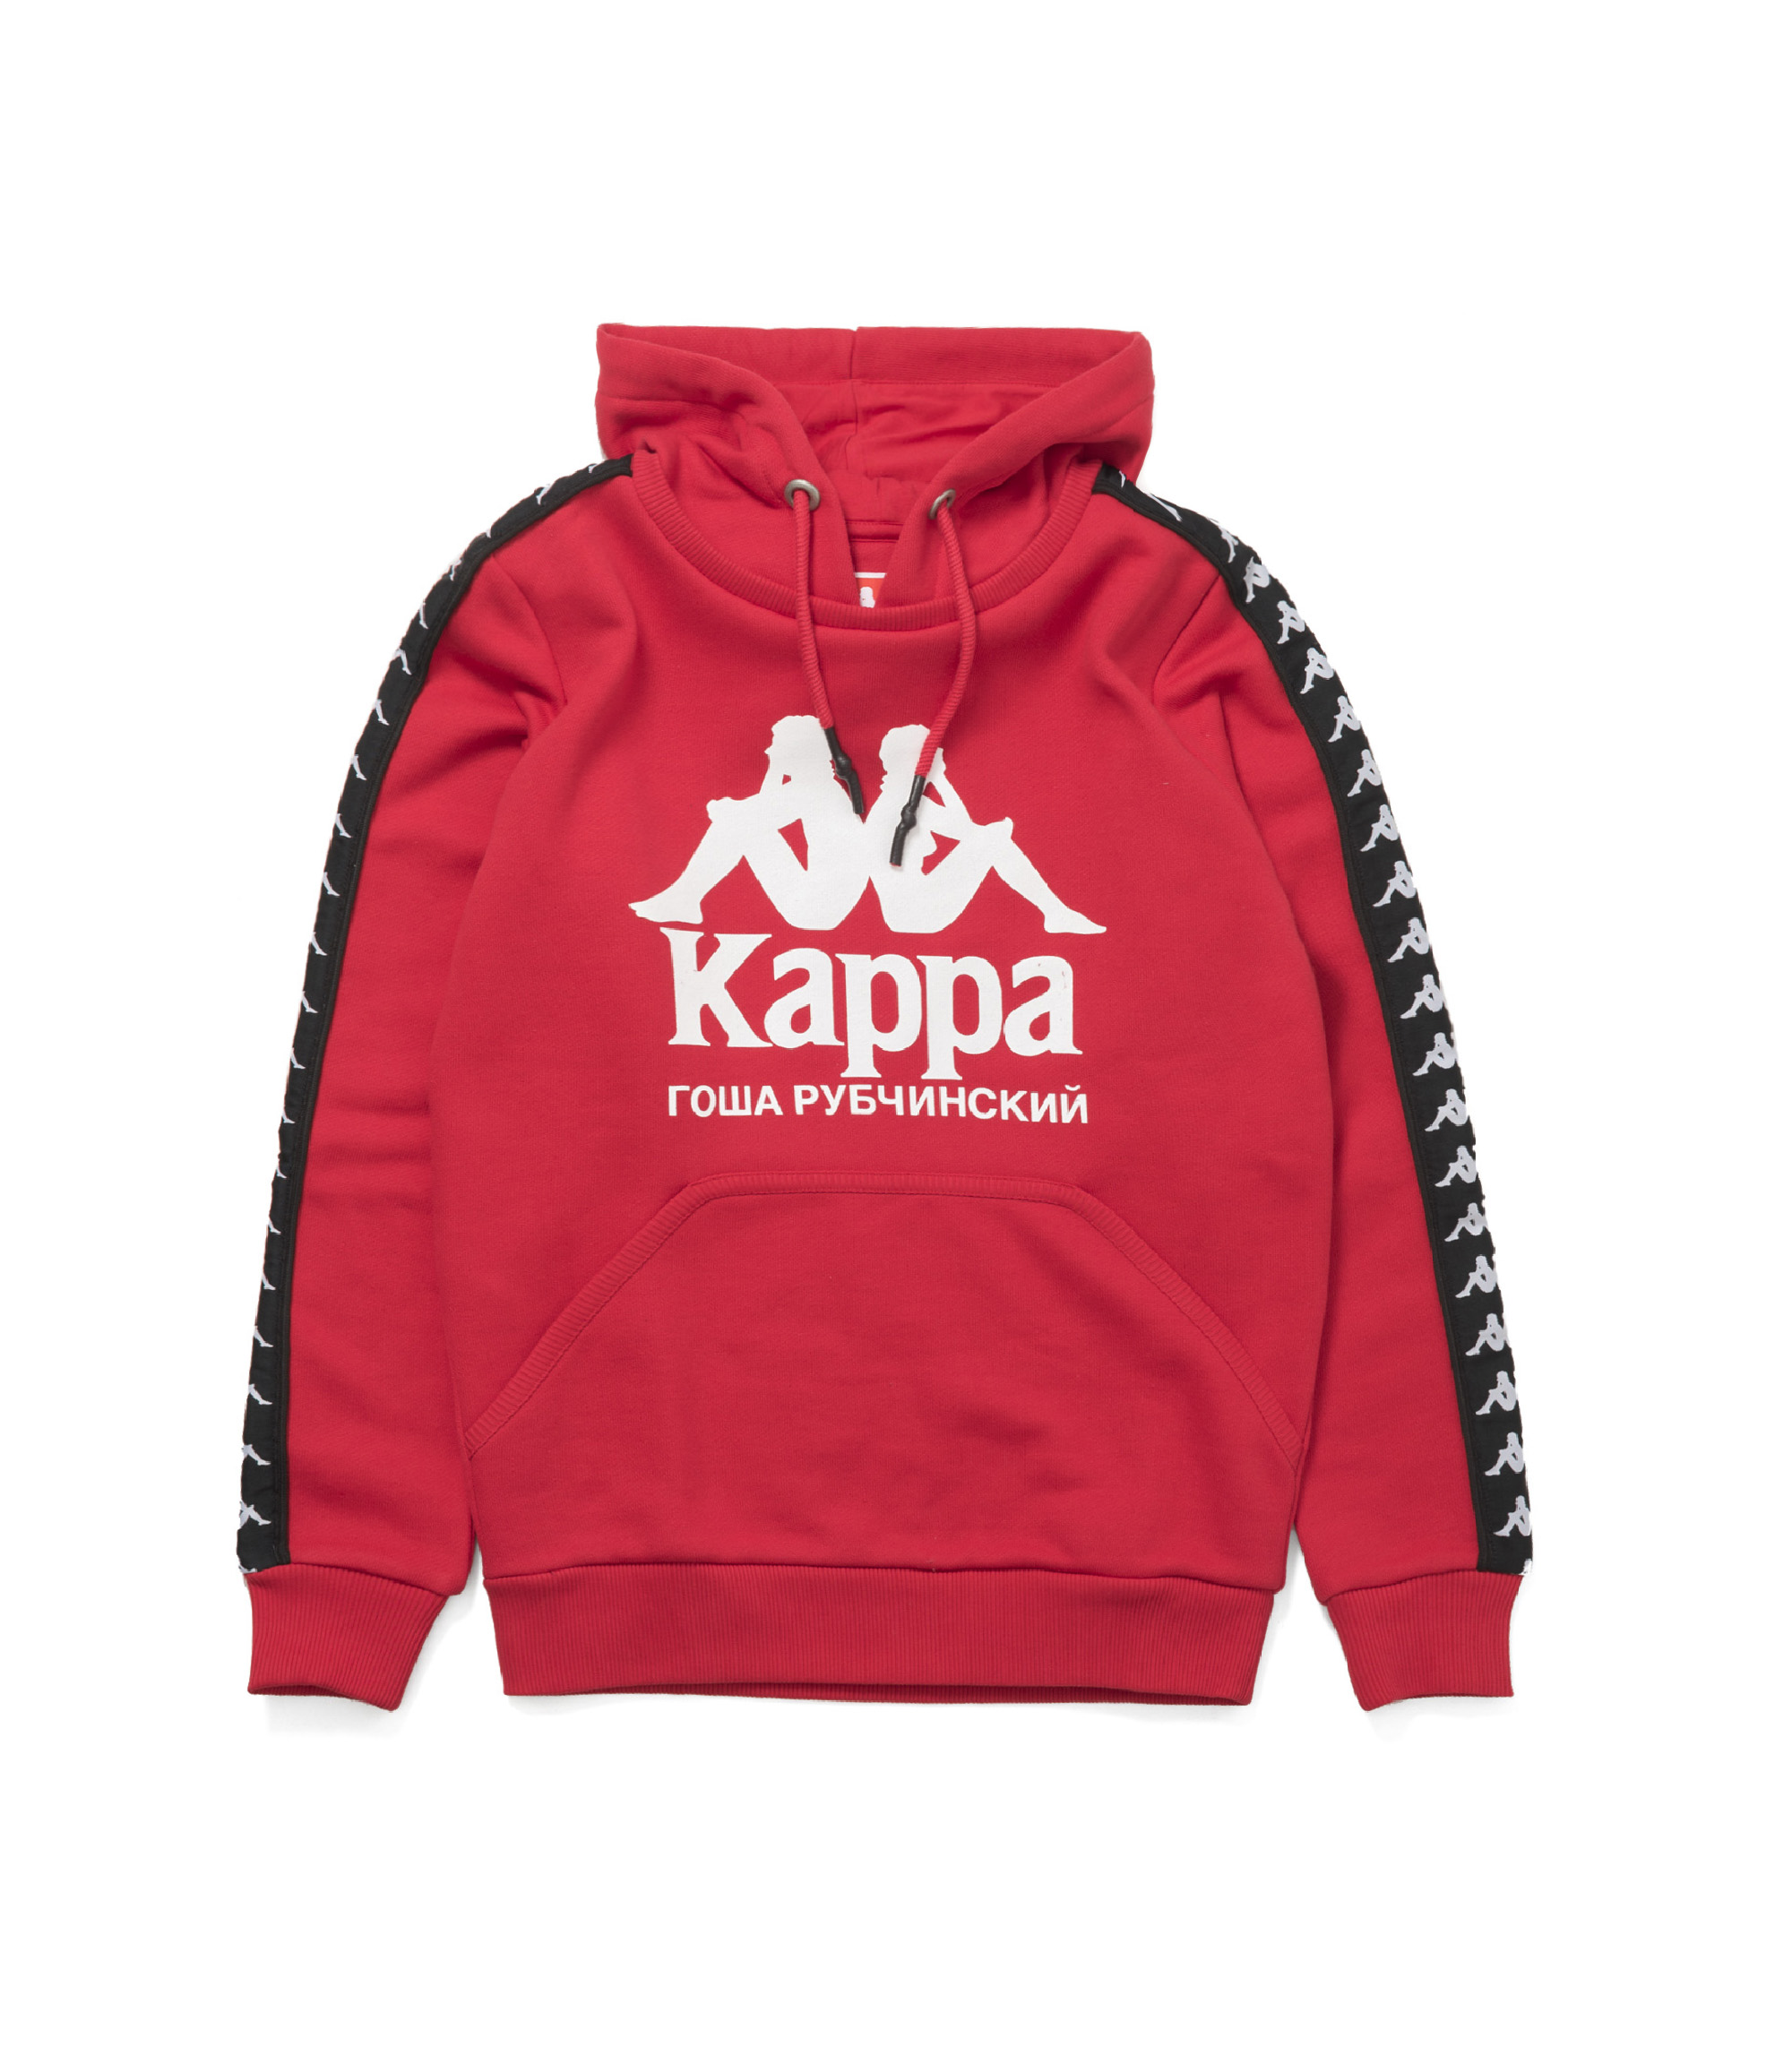 Gosha Kappa Hoodie Red at itk online store